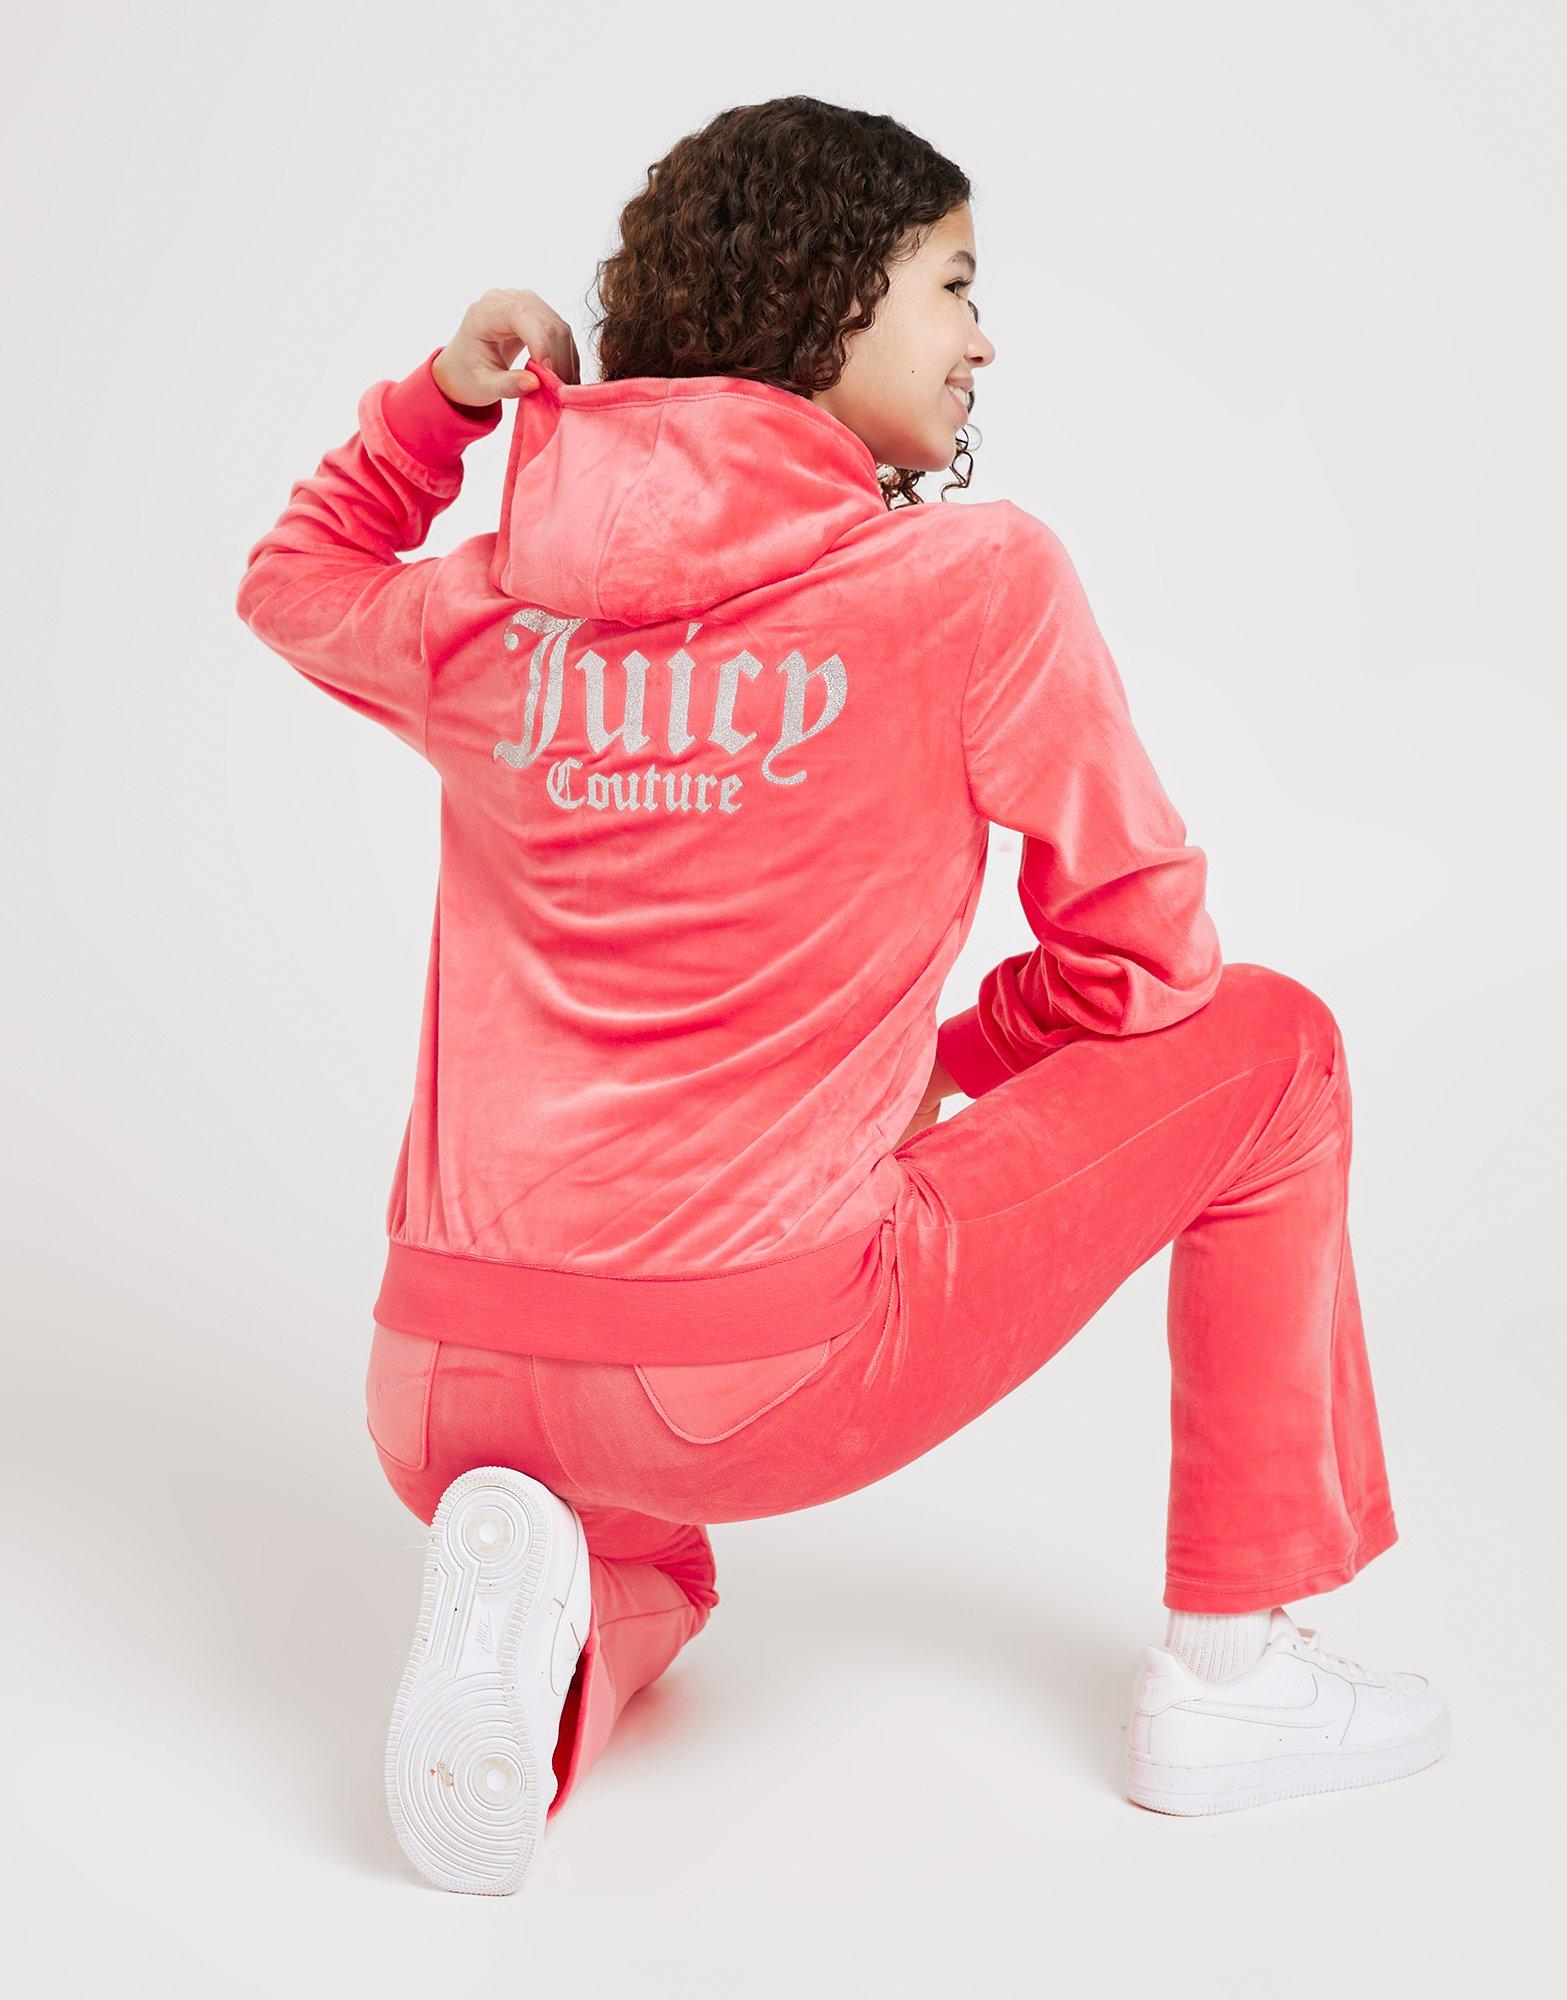 Juicy Couture, Brands We Love